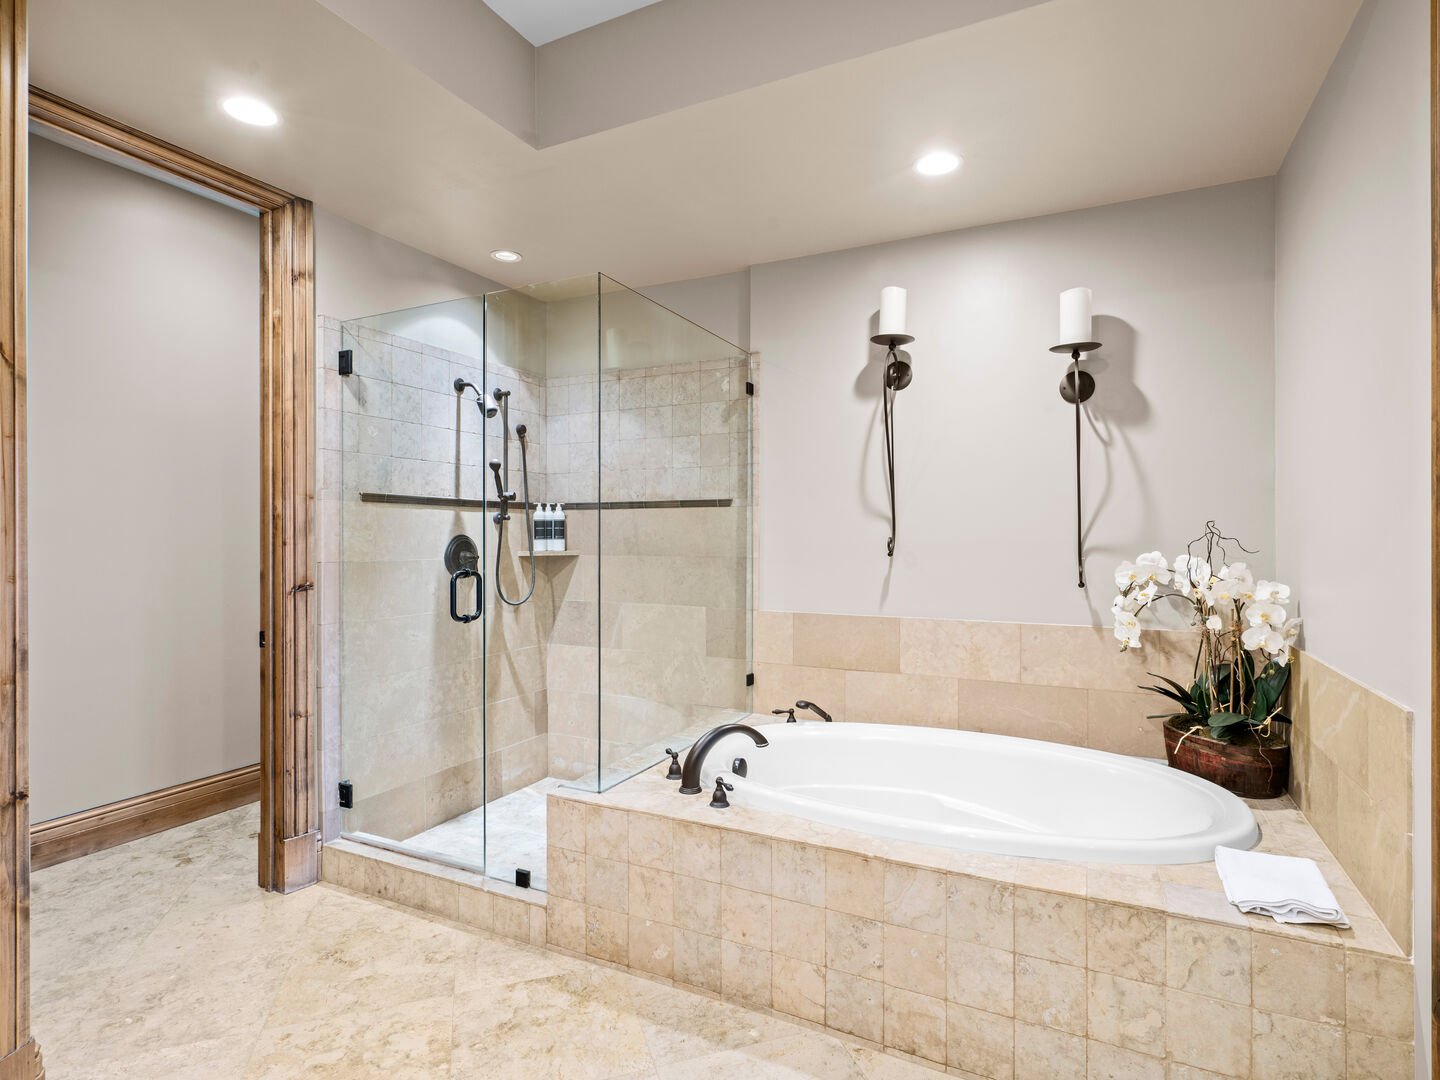 Primary Suite Bathroom / Shower / Tub